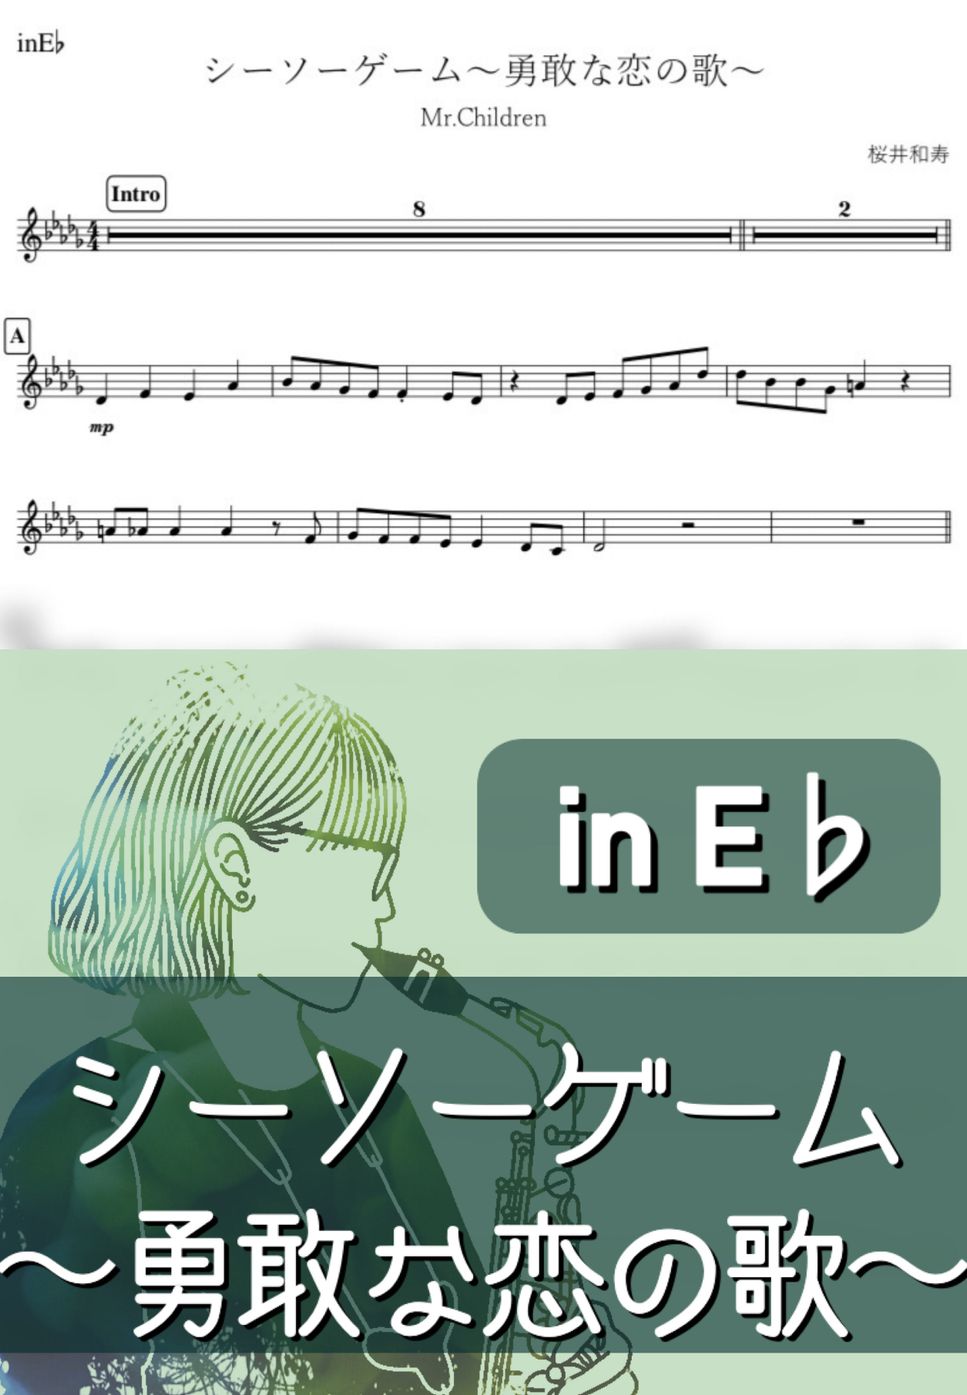 Mr.Children - シーソーゲーム (E♭) by kanamusic